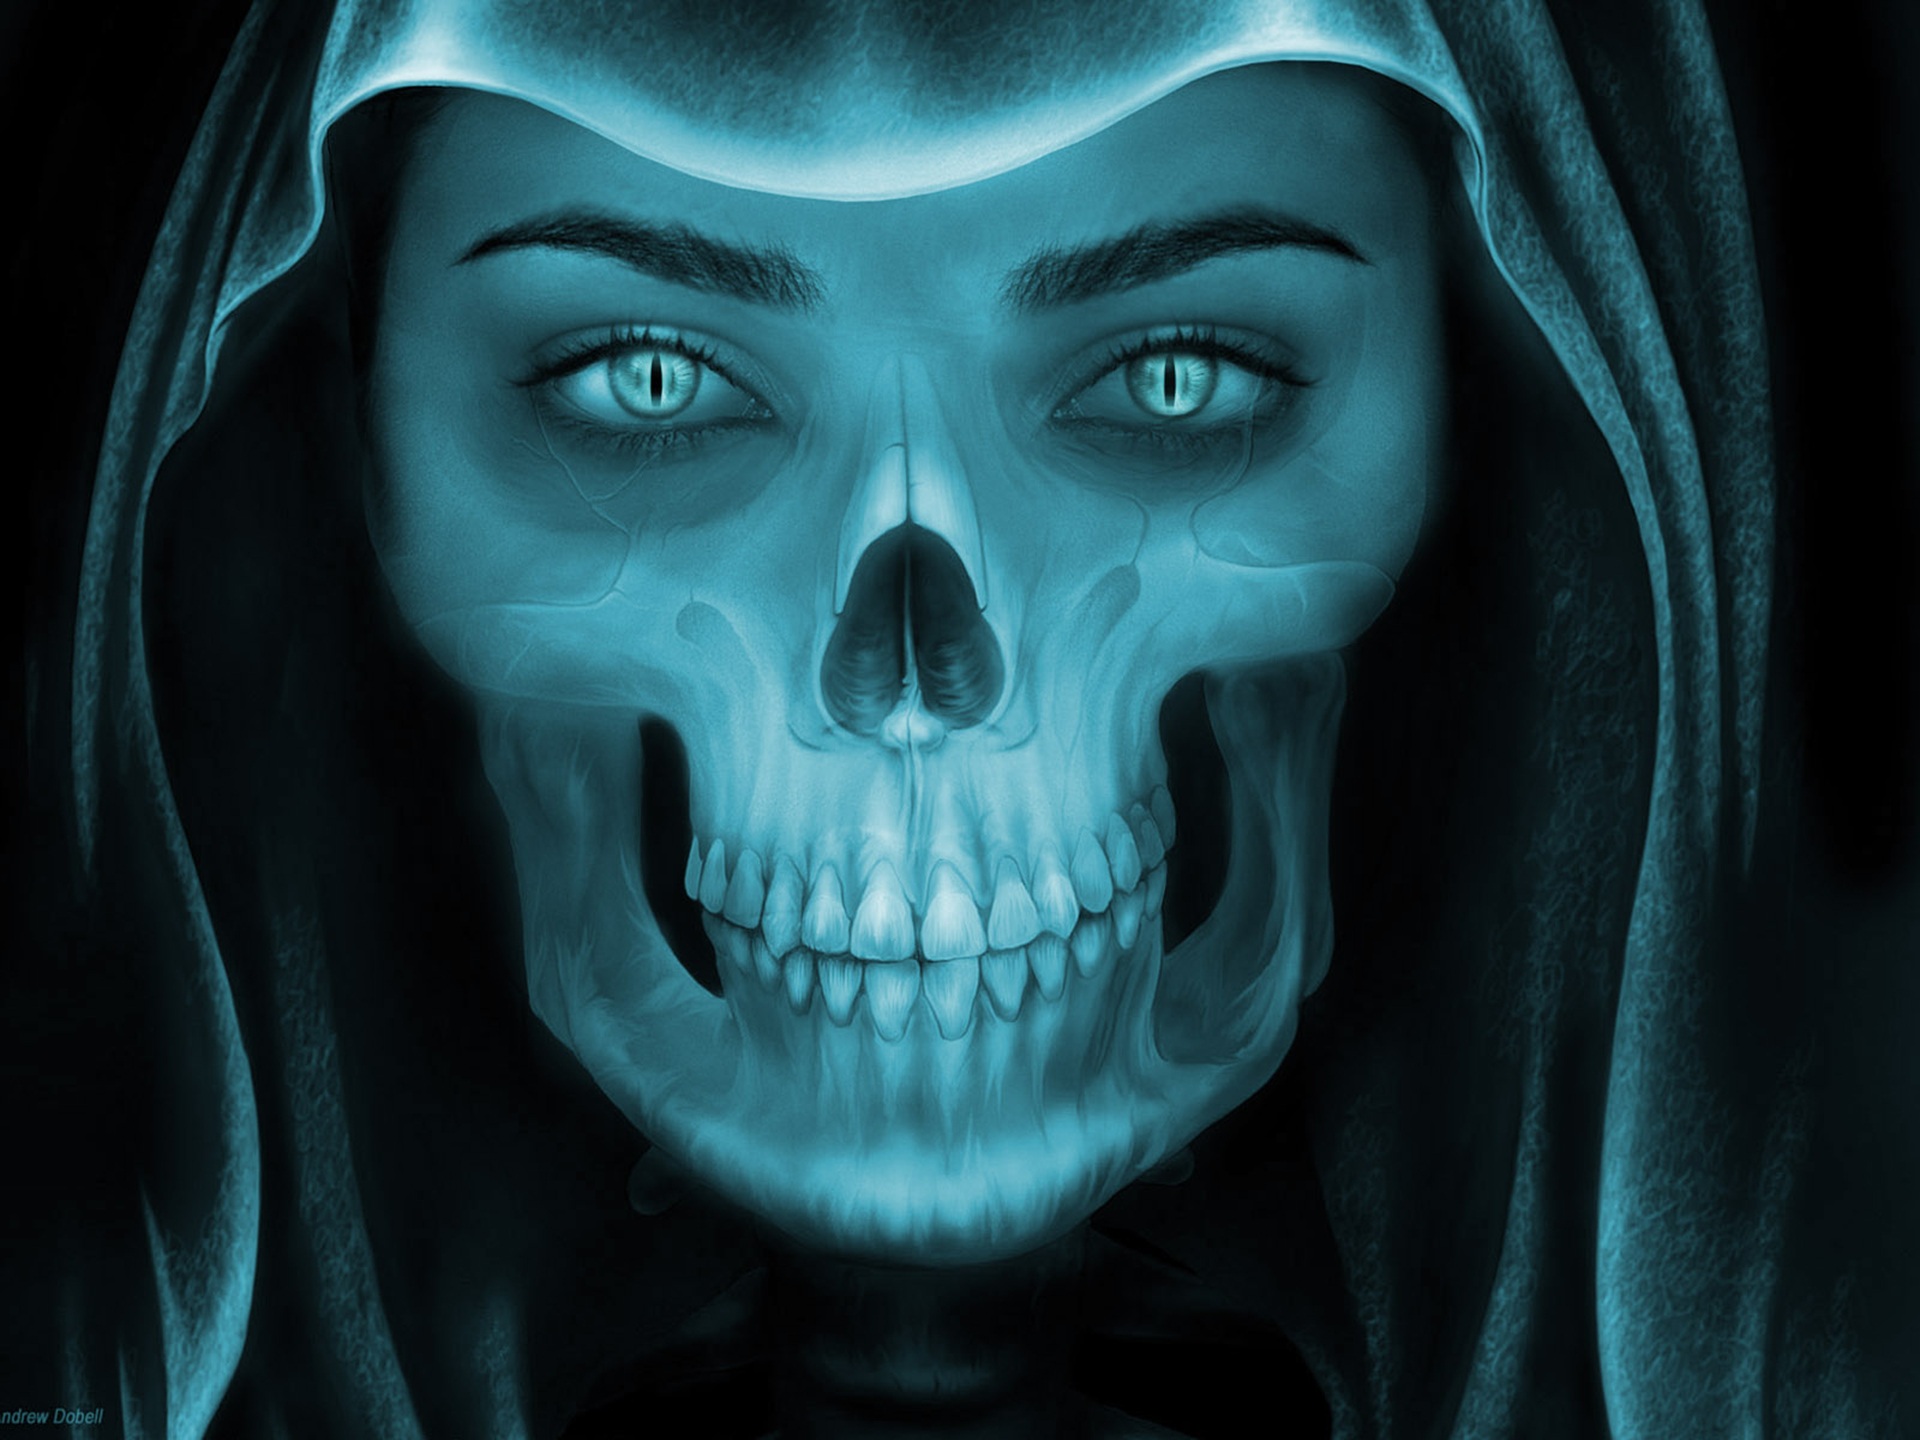 Blue x-ray skull by Andrew Dobell